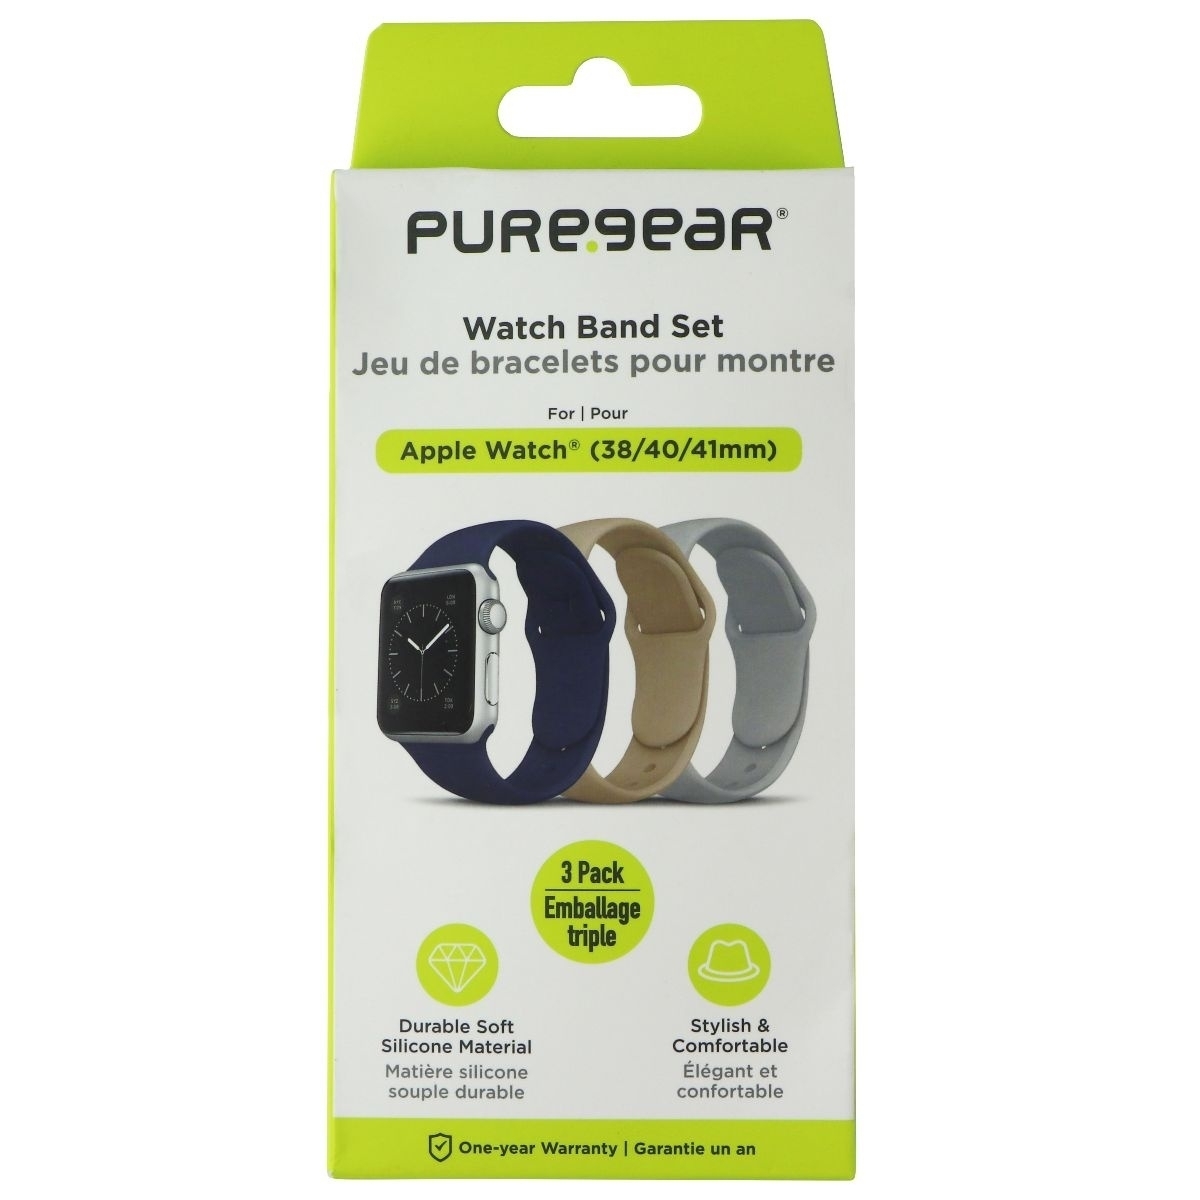 PureGear Watch Band Set For Apple Watch 38/40/41mm - Gray, Blue, Tan (3 Pack)